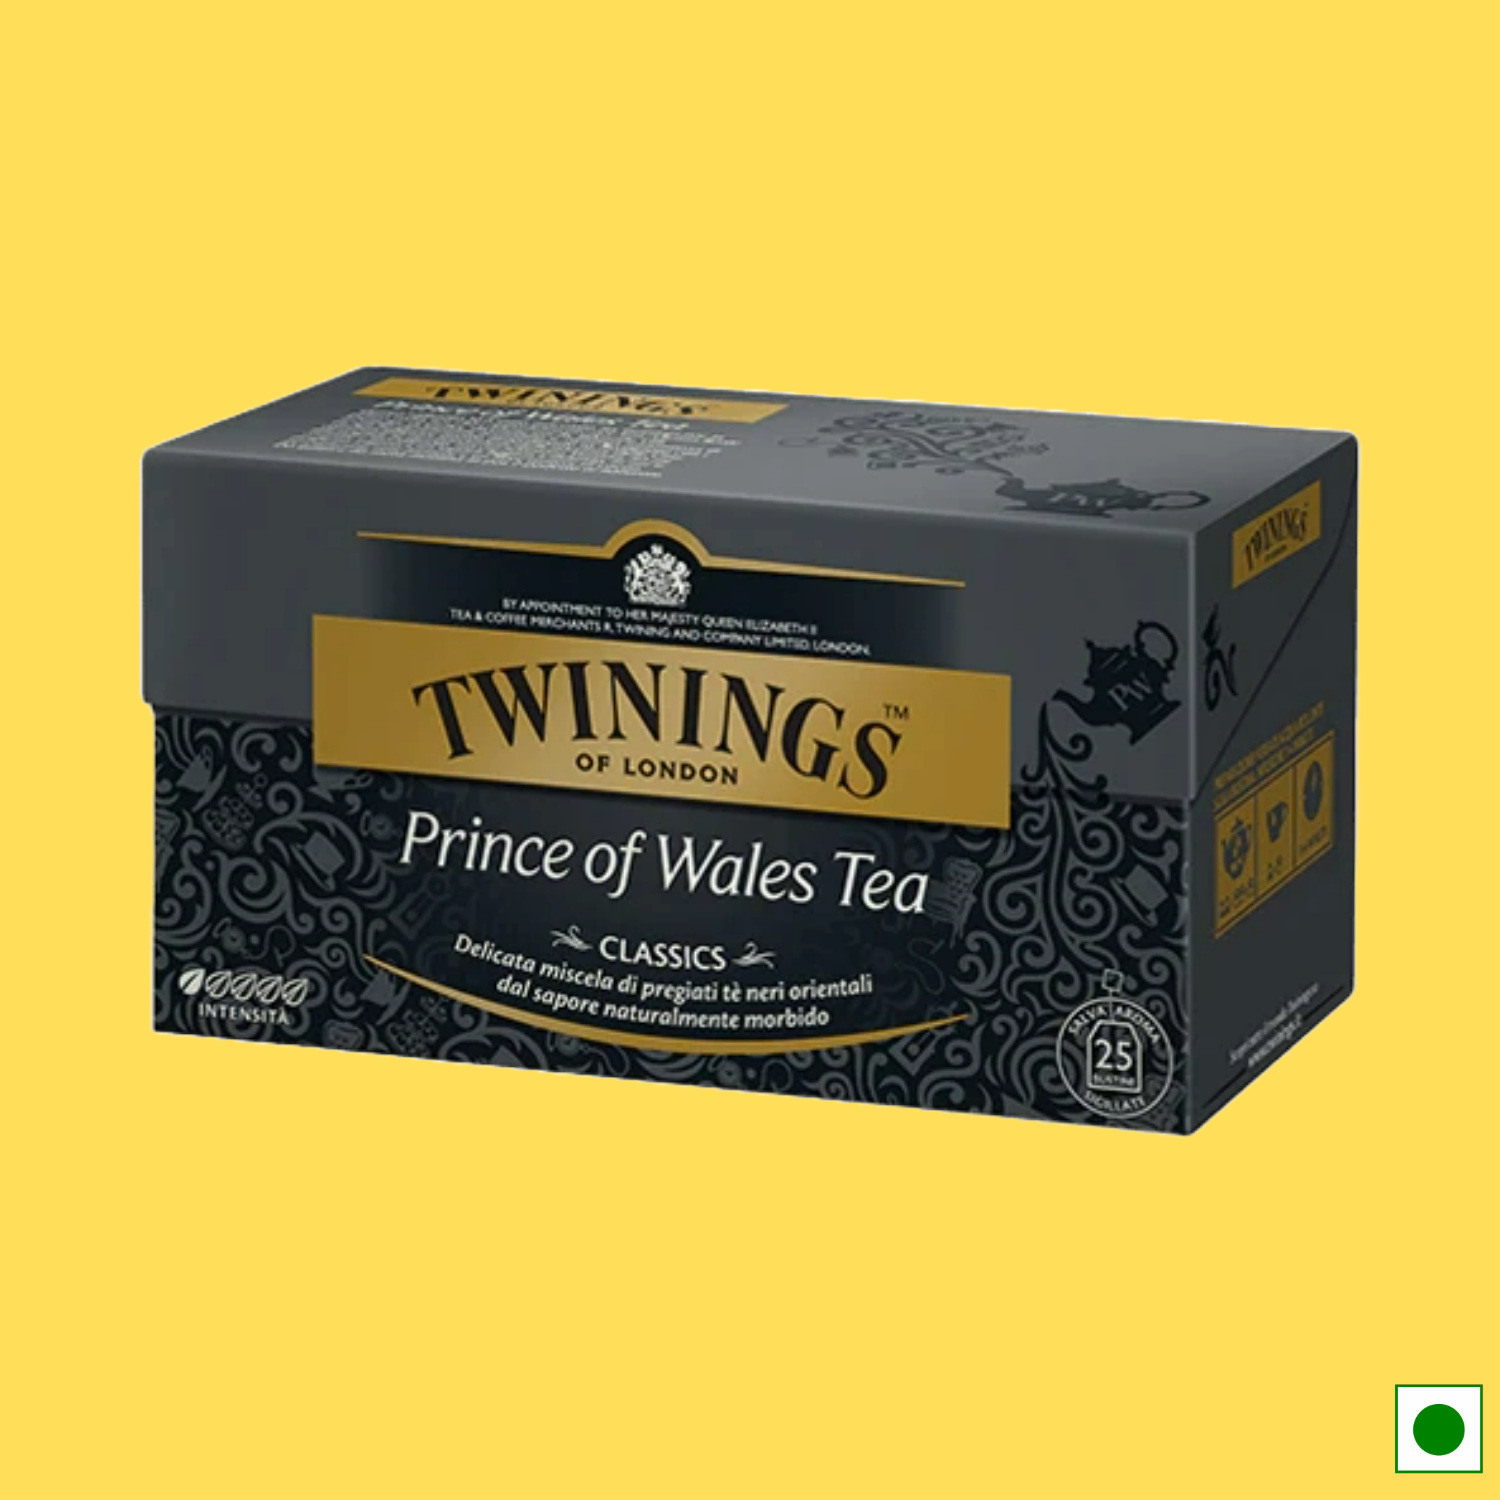 Twinings Prince of Wales Gentle Black Tea, 25 Tea Bags (Imported)